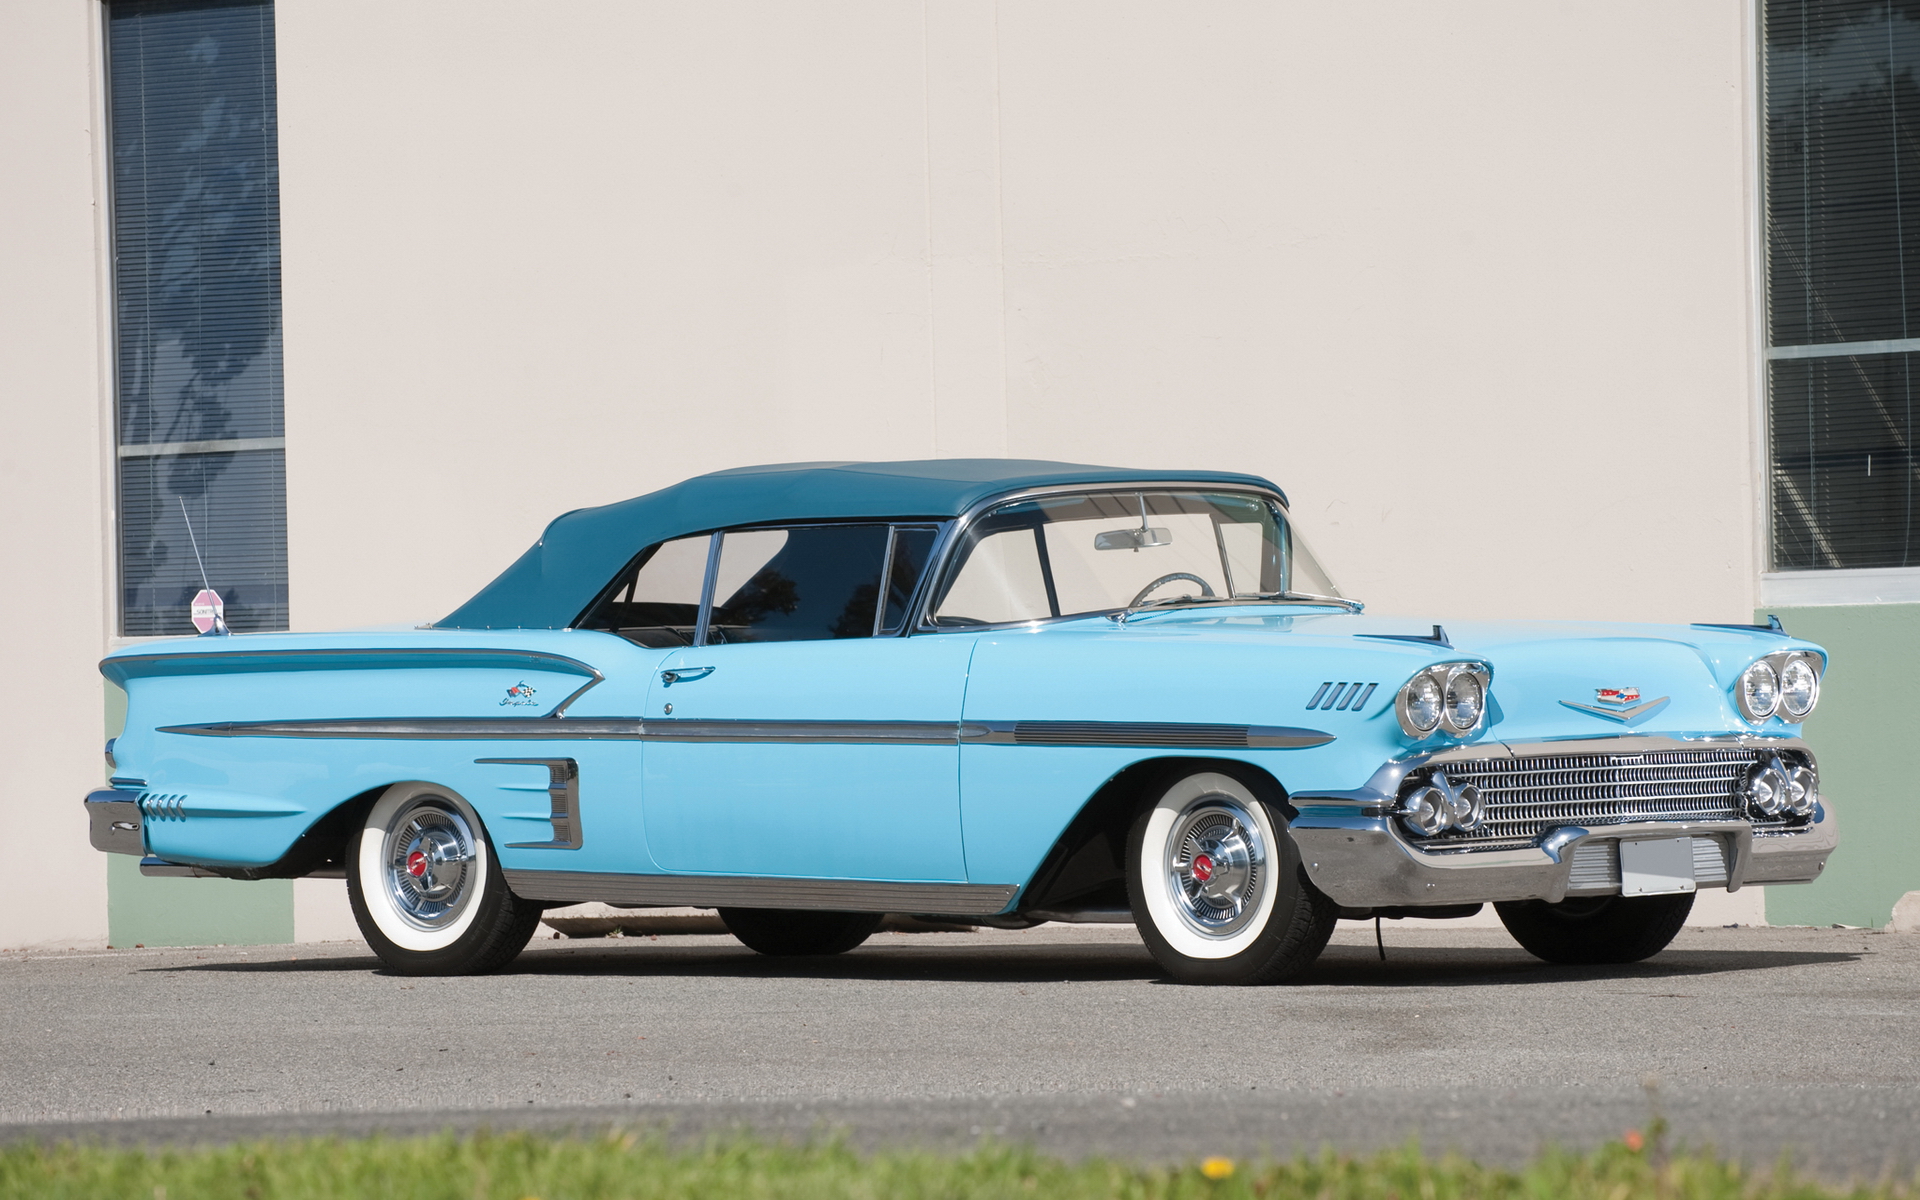 1958 Chevrolet Impala Wallpapers